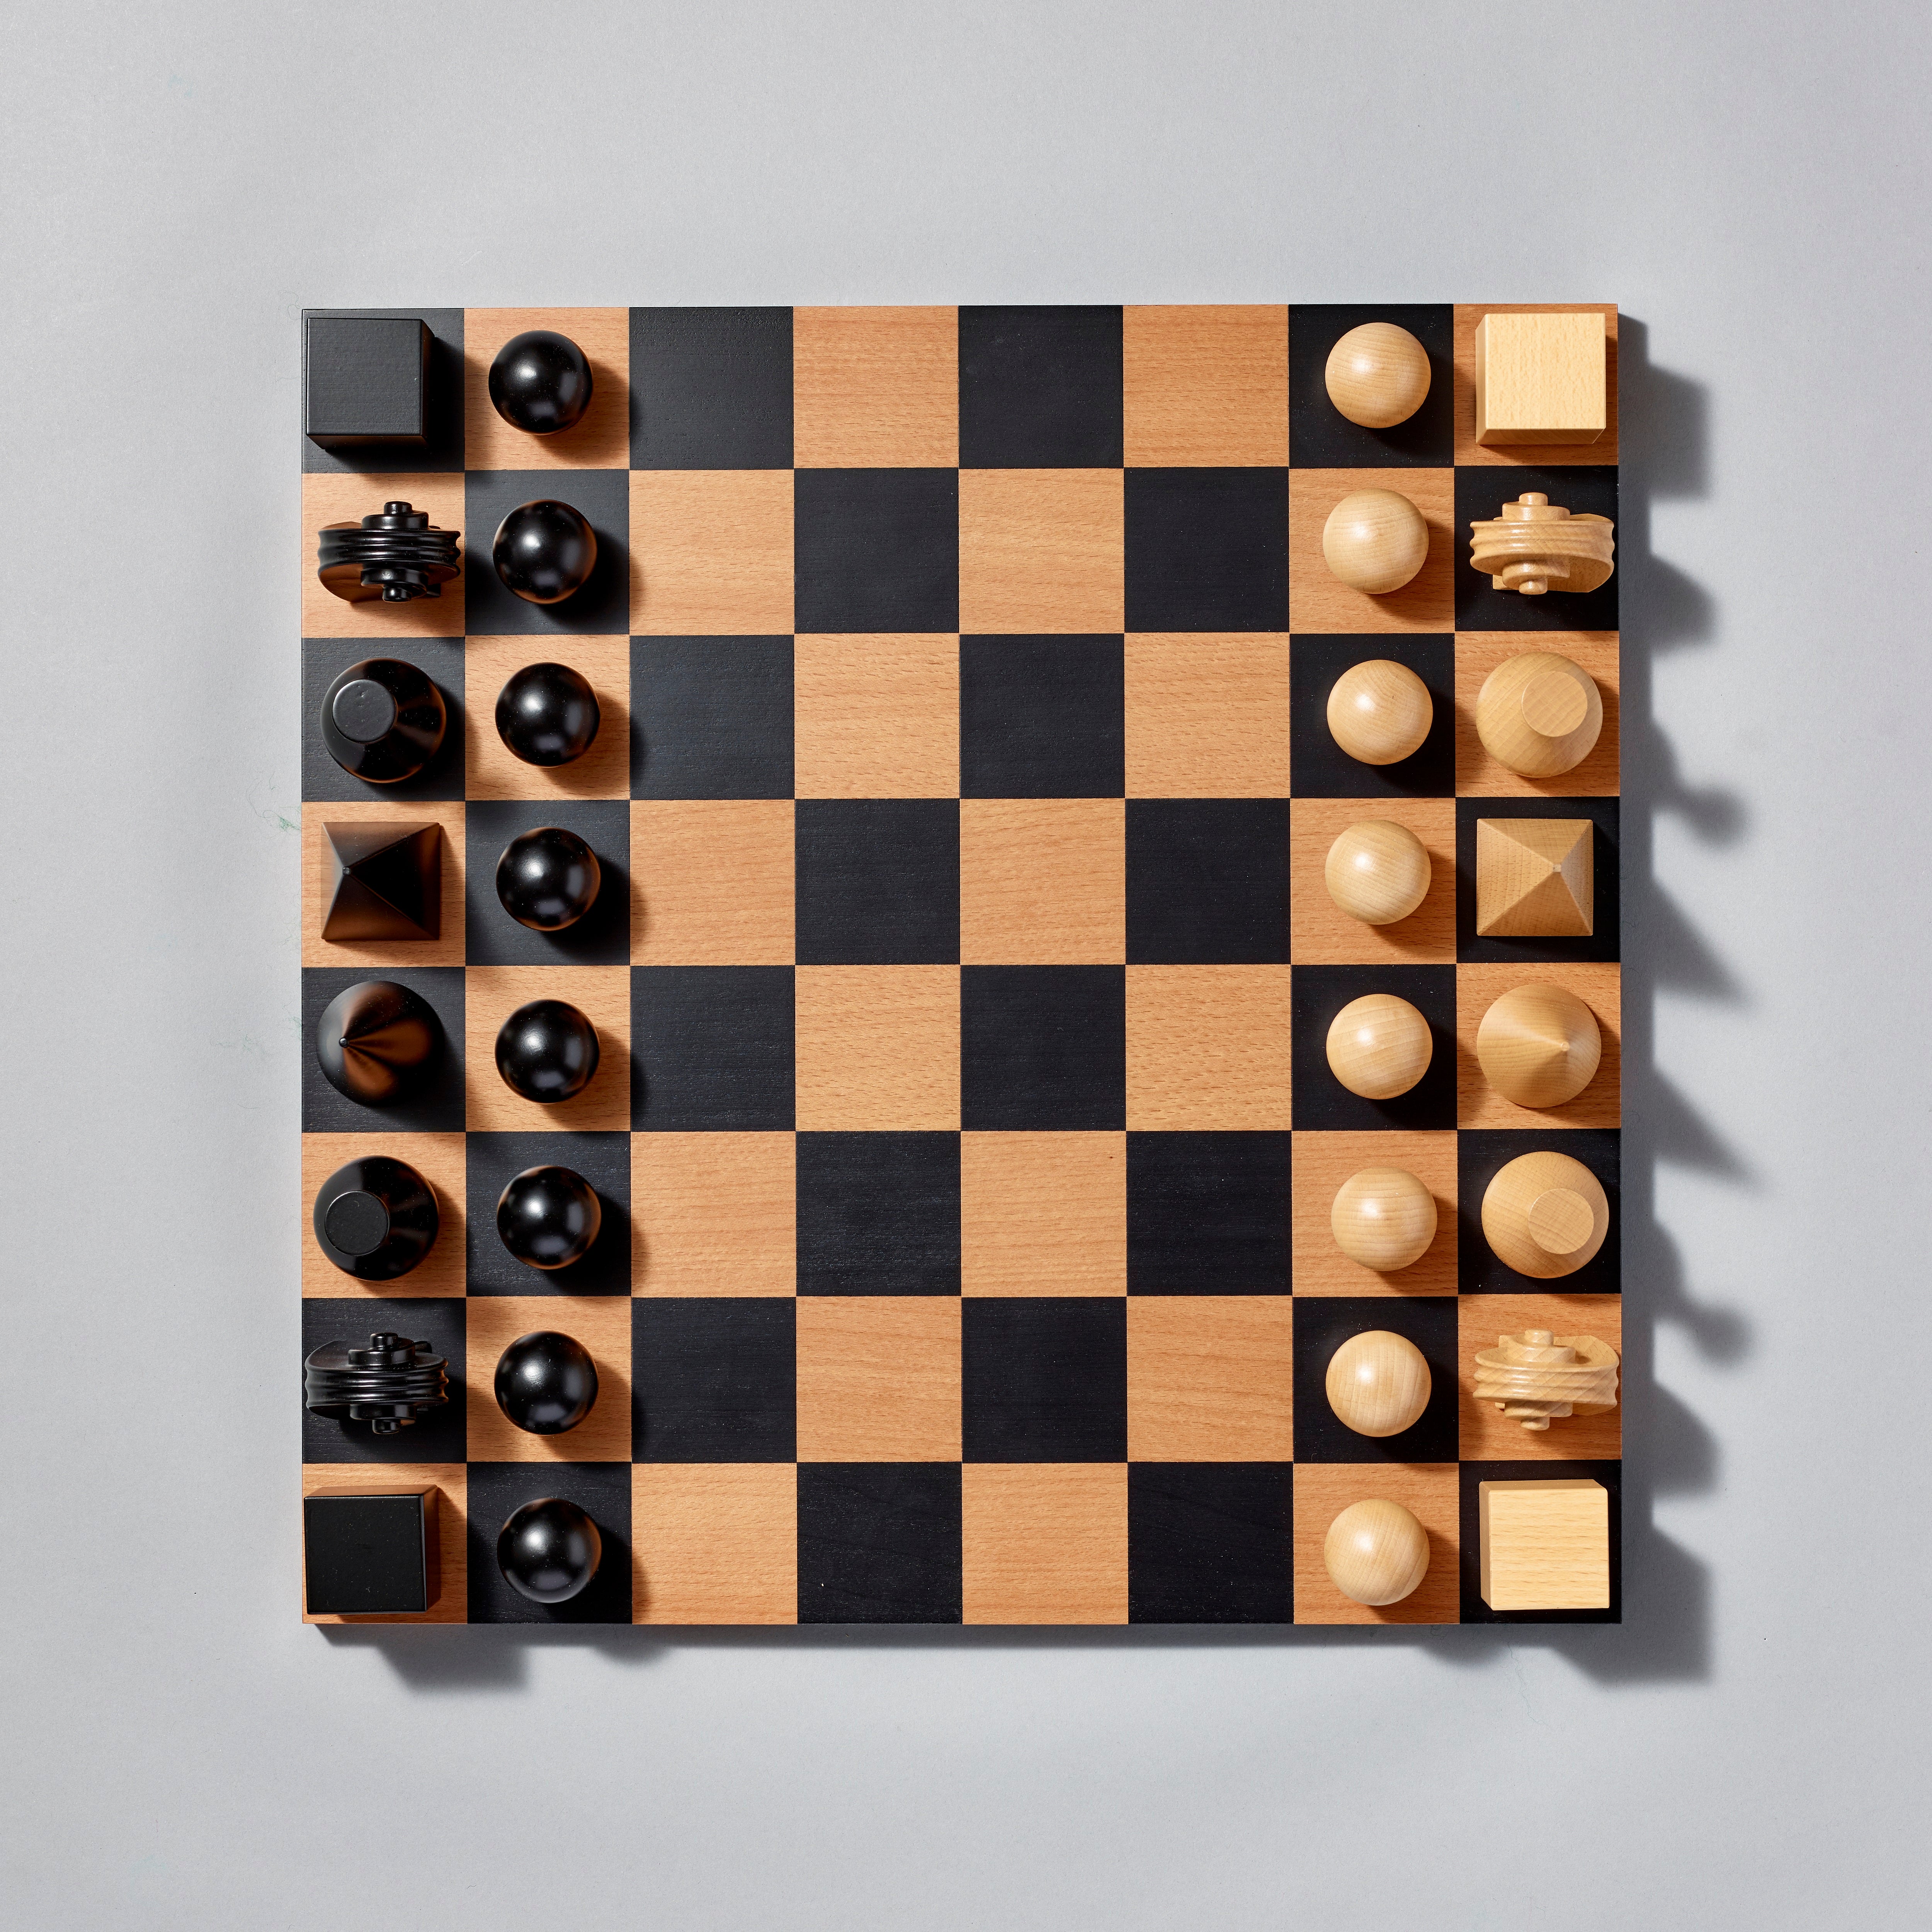 Solid beech wood Man Ray Chess Set. Board size: 17" x 17" x 3/4".